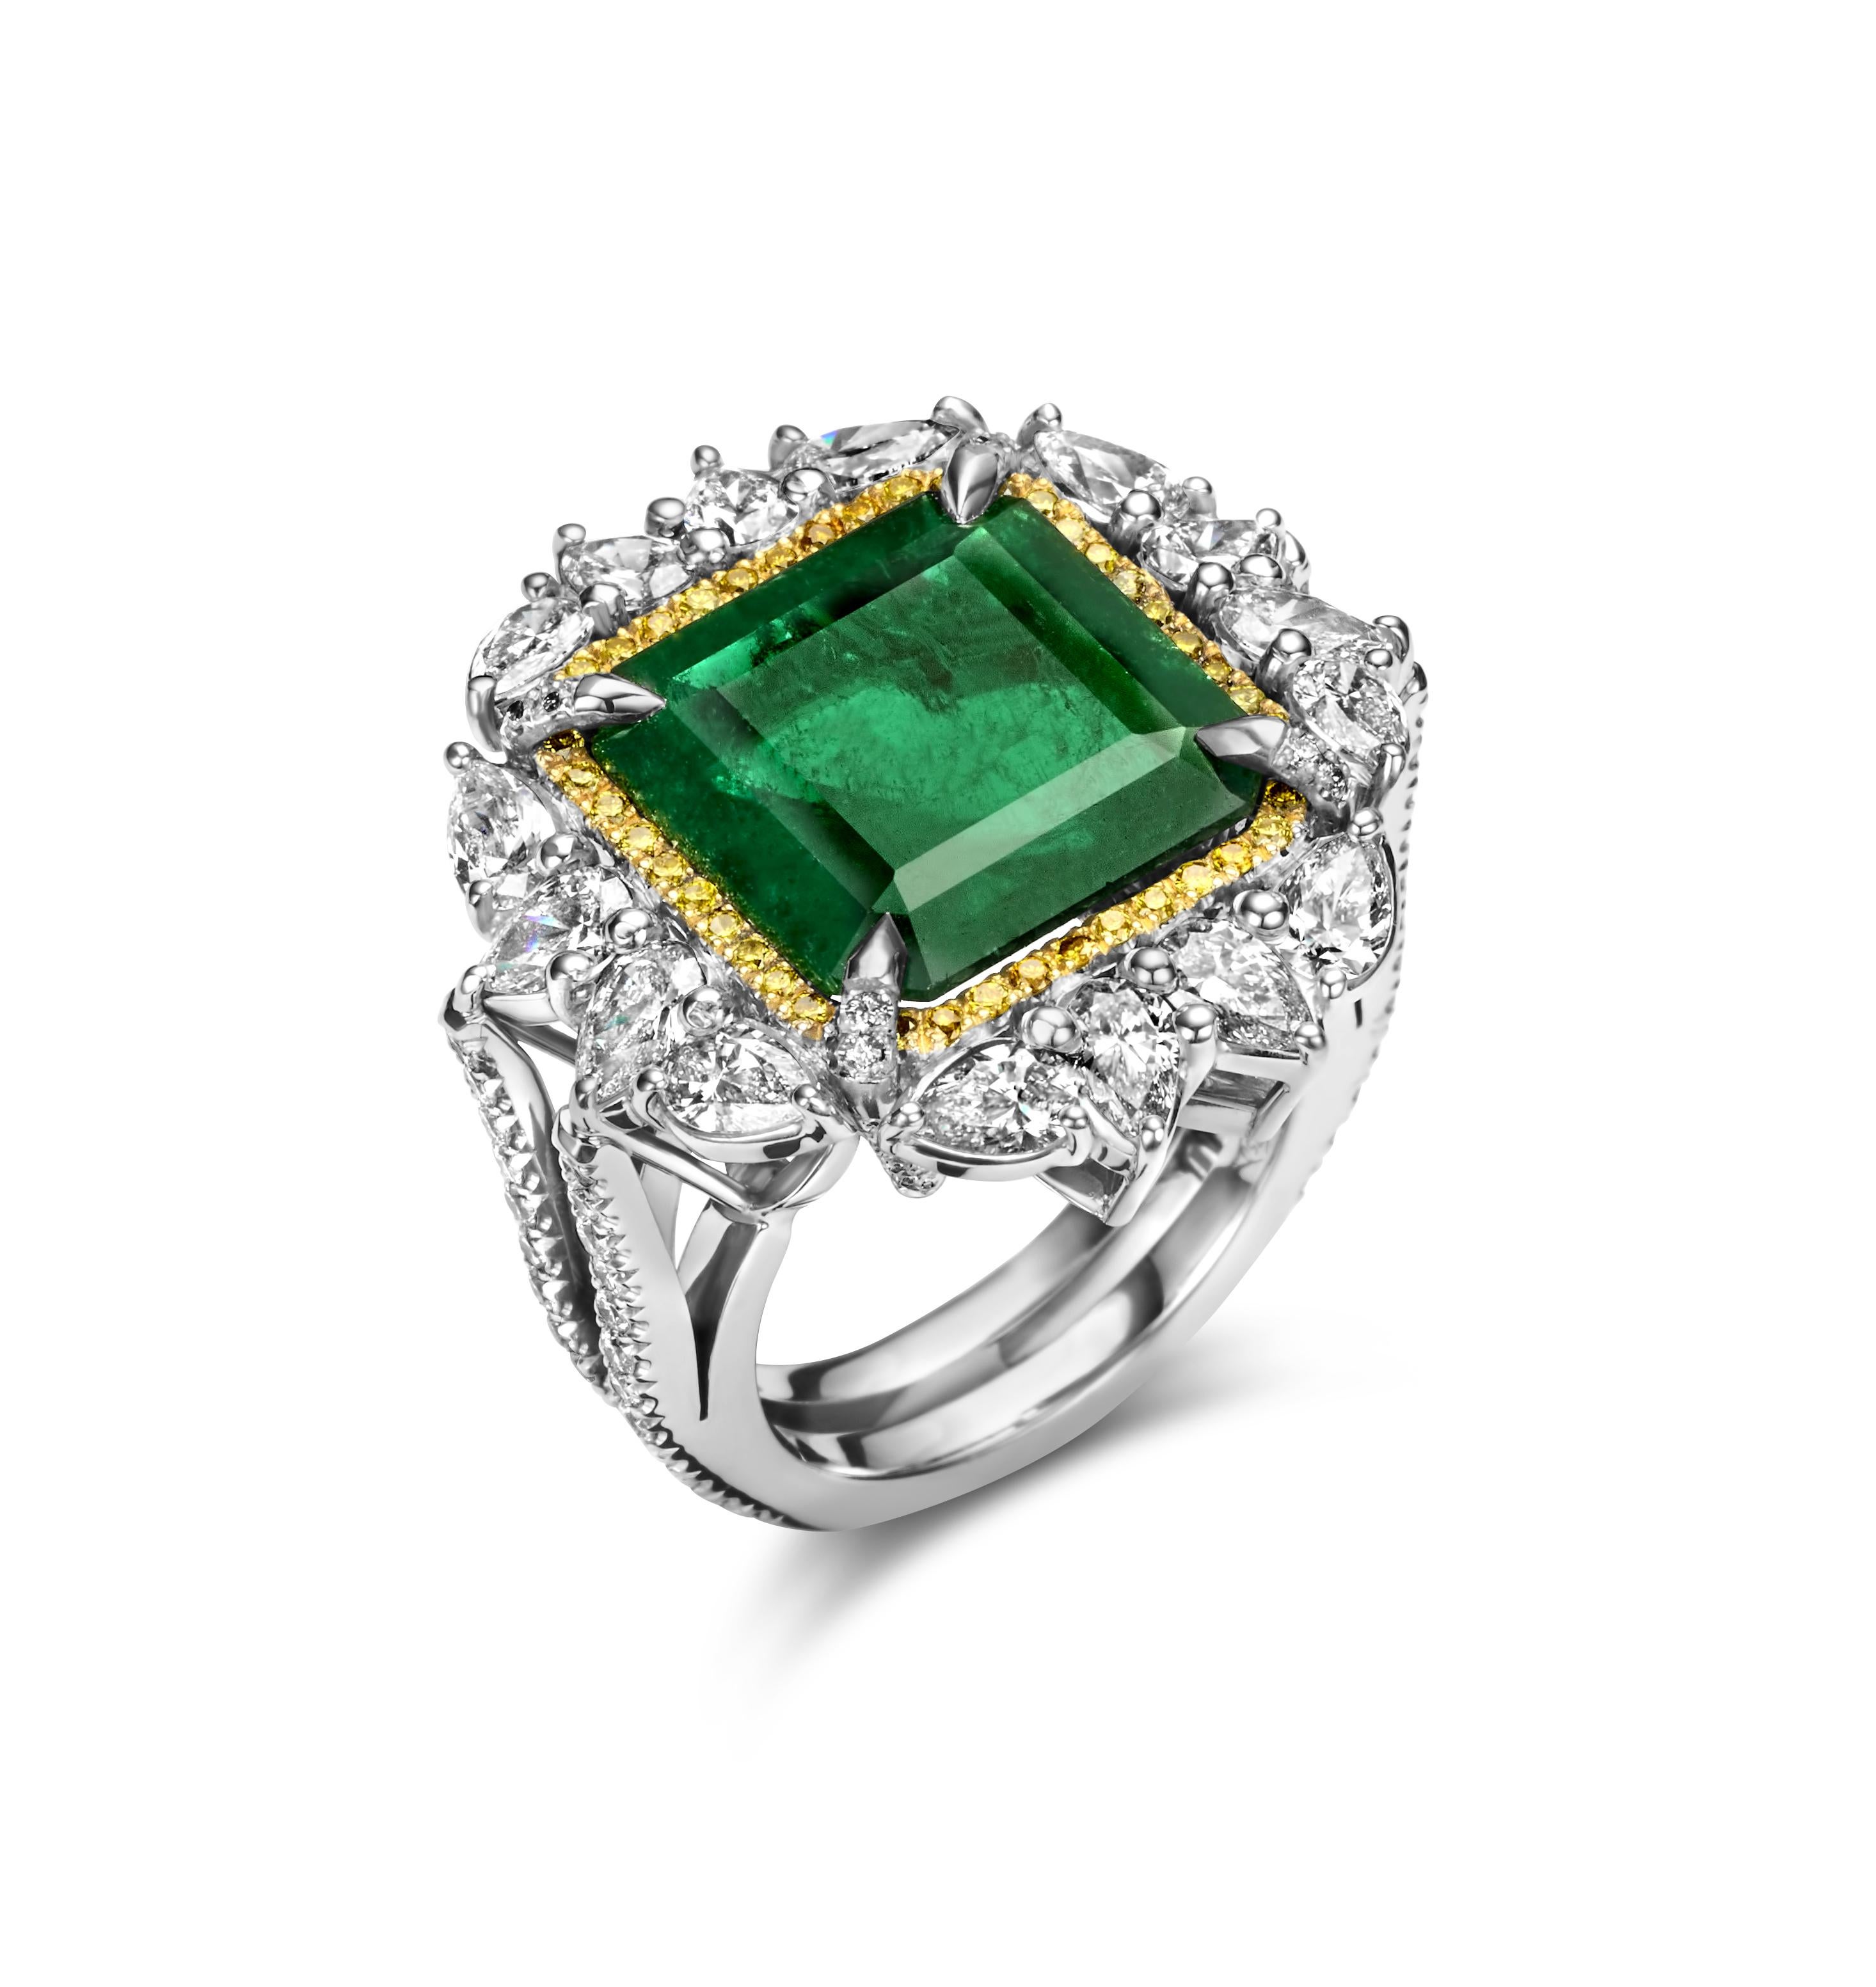 Stunning impressive ring set with a big Colombian emerald  and diamonds.

Colombian Emerald Minor 11.46 ct Gubelin certified,Minor 

Pear Shaped diamonds 2,7 Ct

Brilliant cut diamonds 0,81 Ct

Fancy yellow brilliant diamonds 0,77 Ct

Material: 18